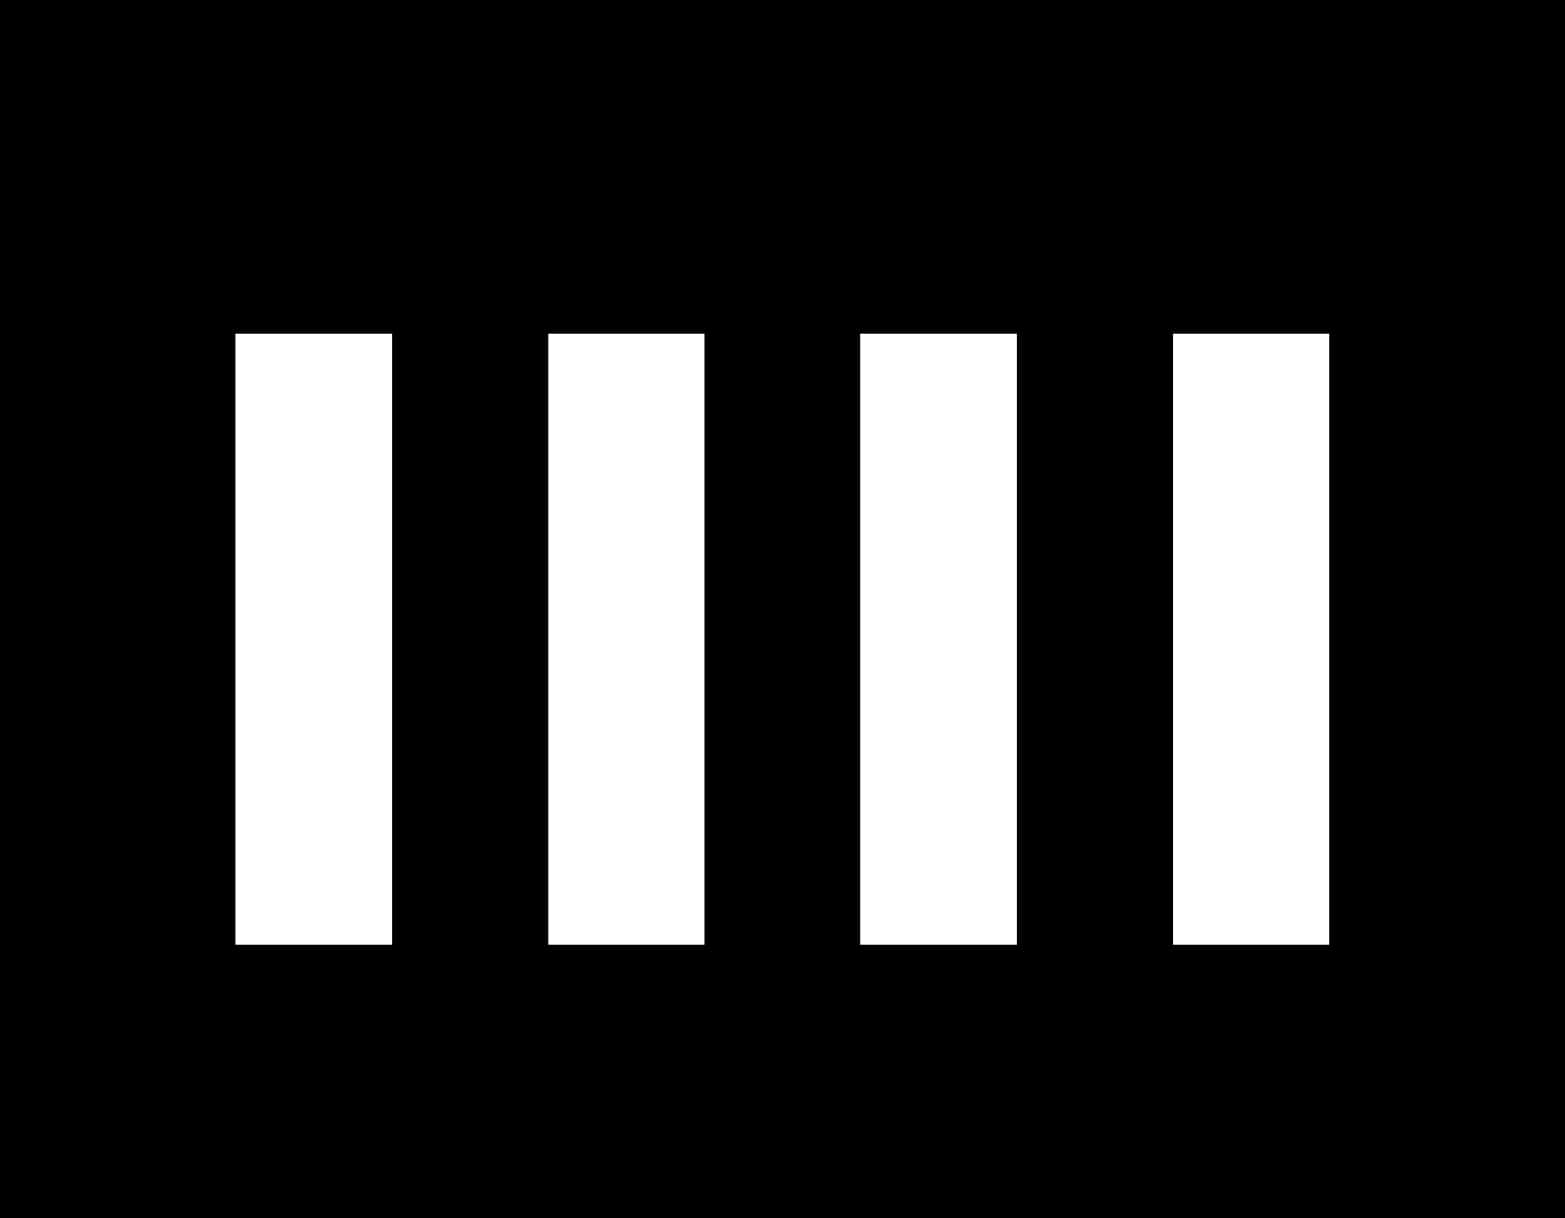 Four Vertical Bars Black Background PNG image